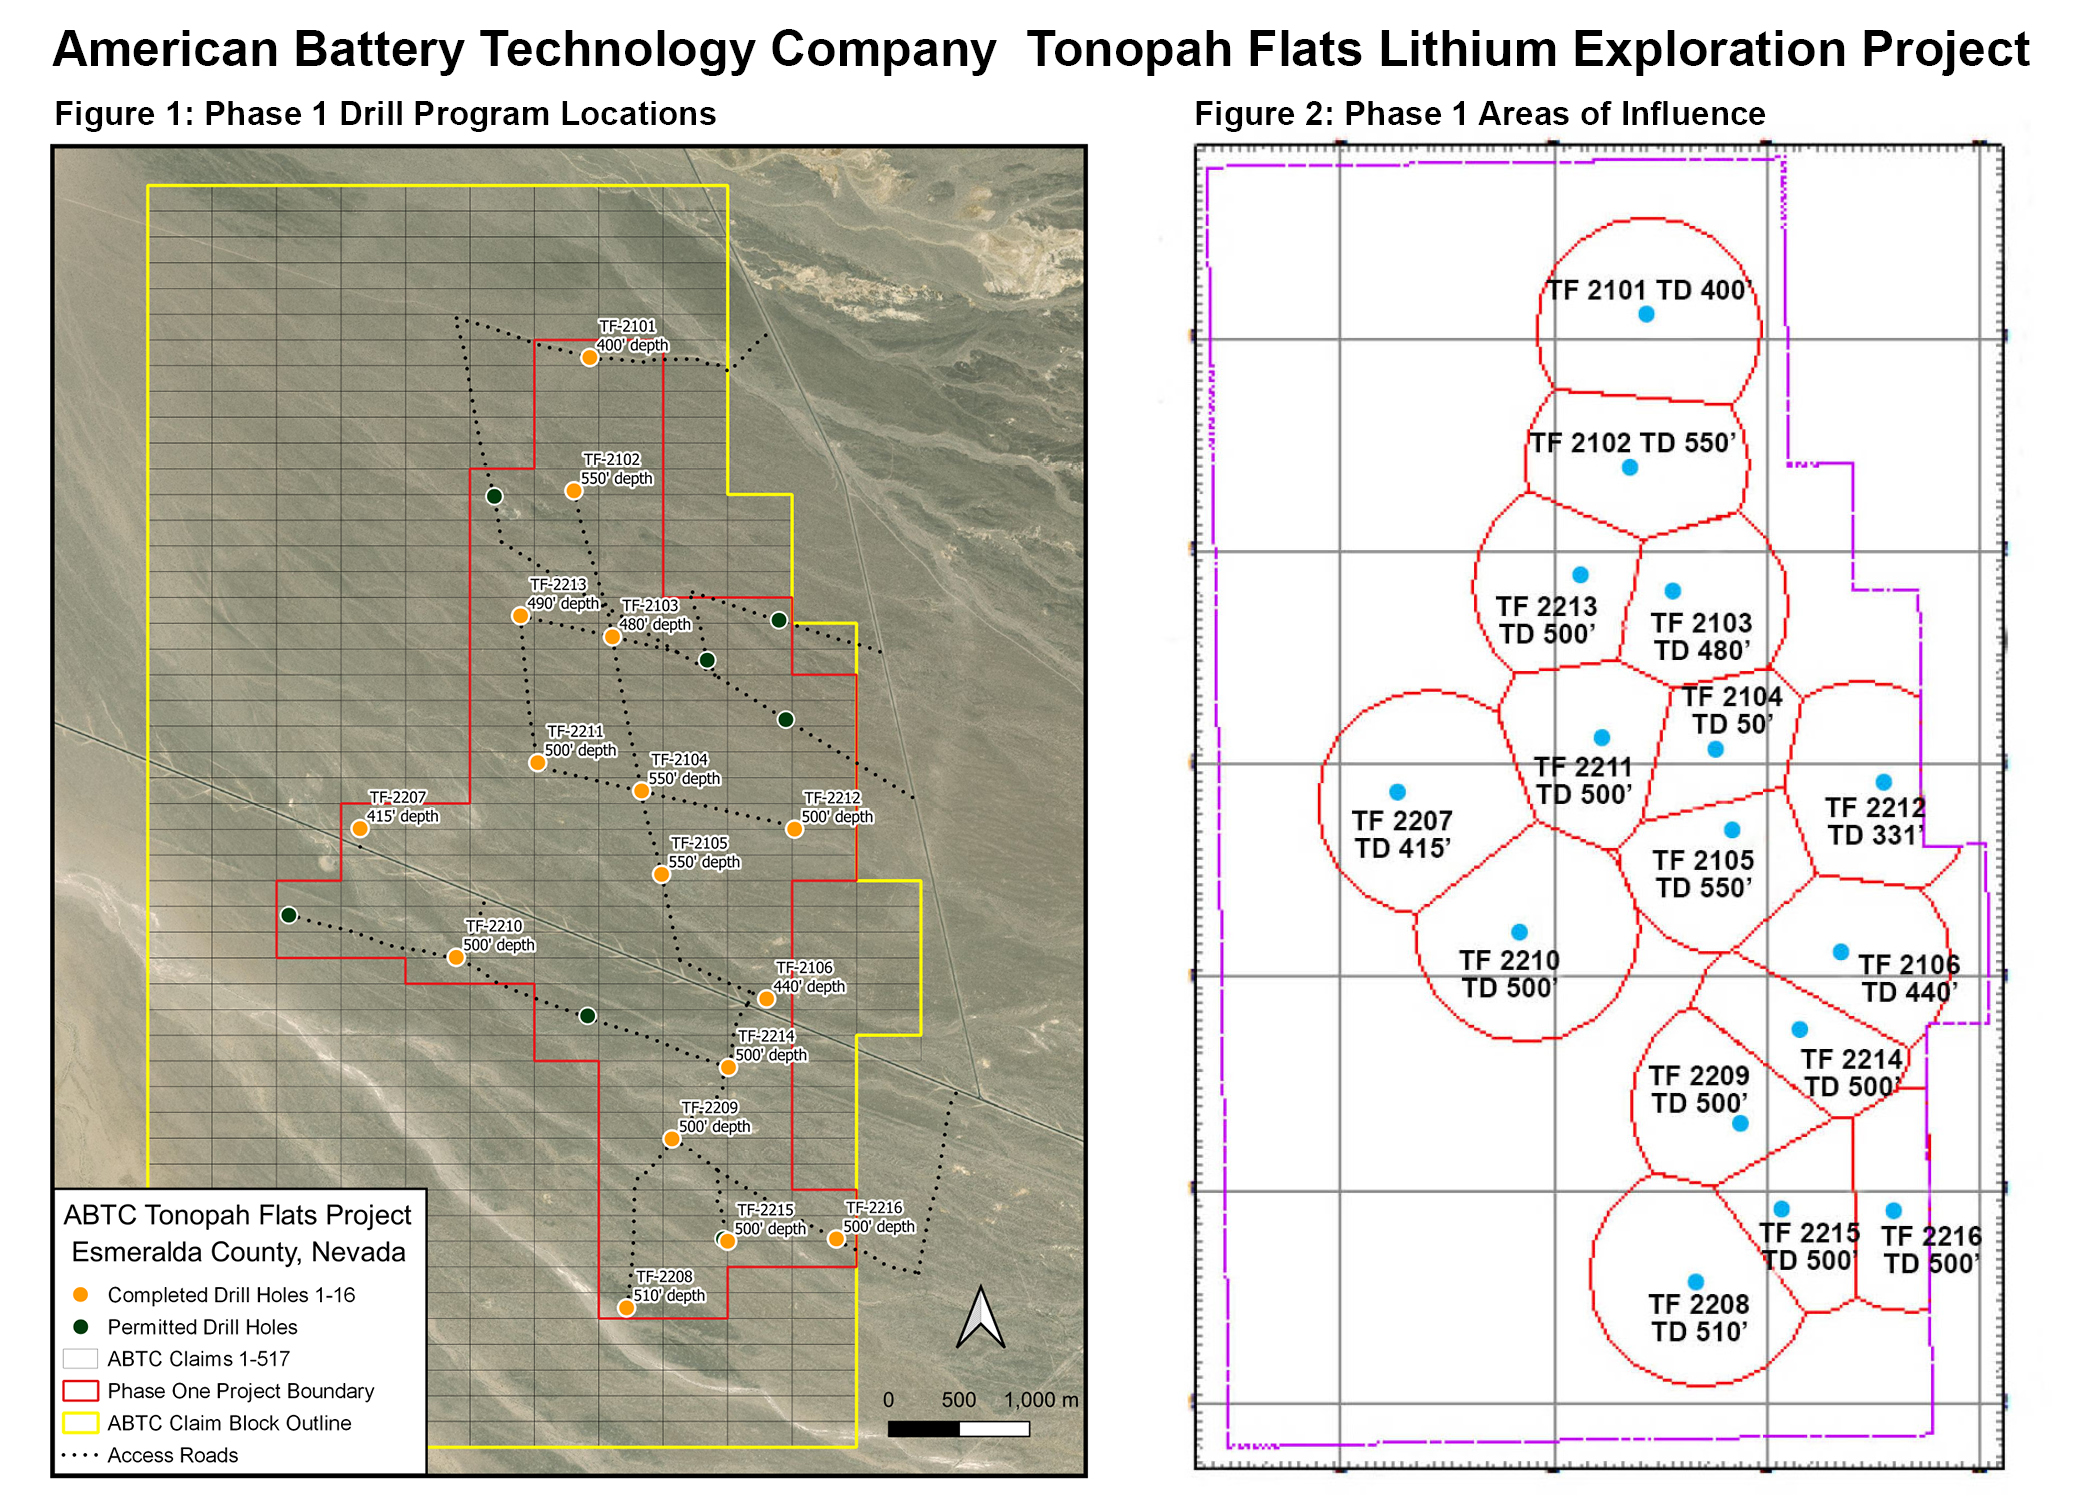 American Battery Technology Company Tonopah Flats Exploration Project